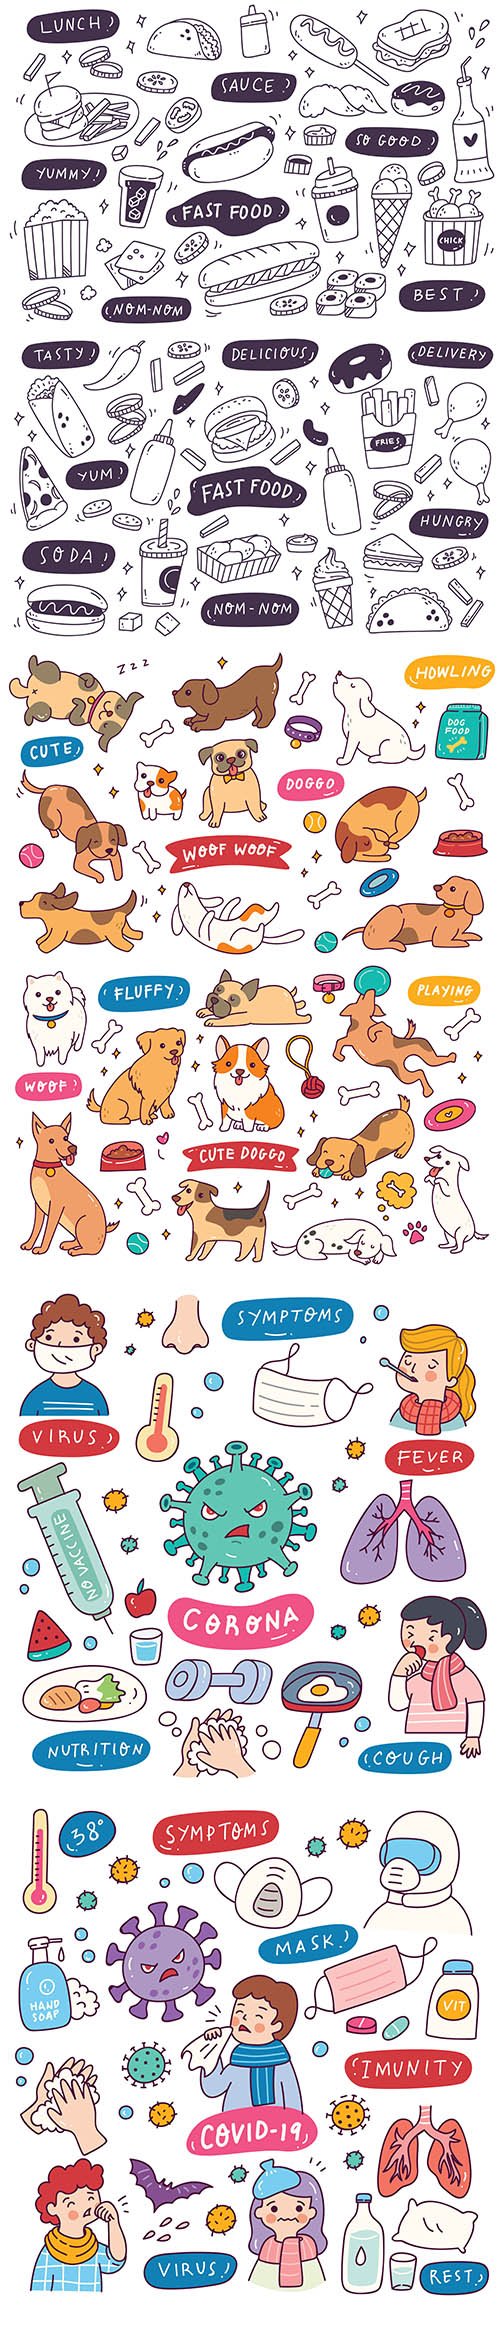 Hand-Drawn Food, Dog and Corona Virus Doodle Element